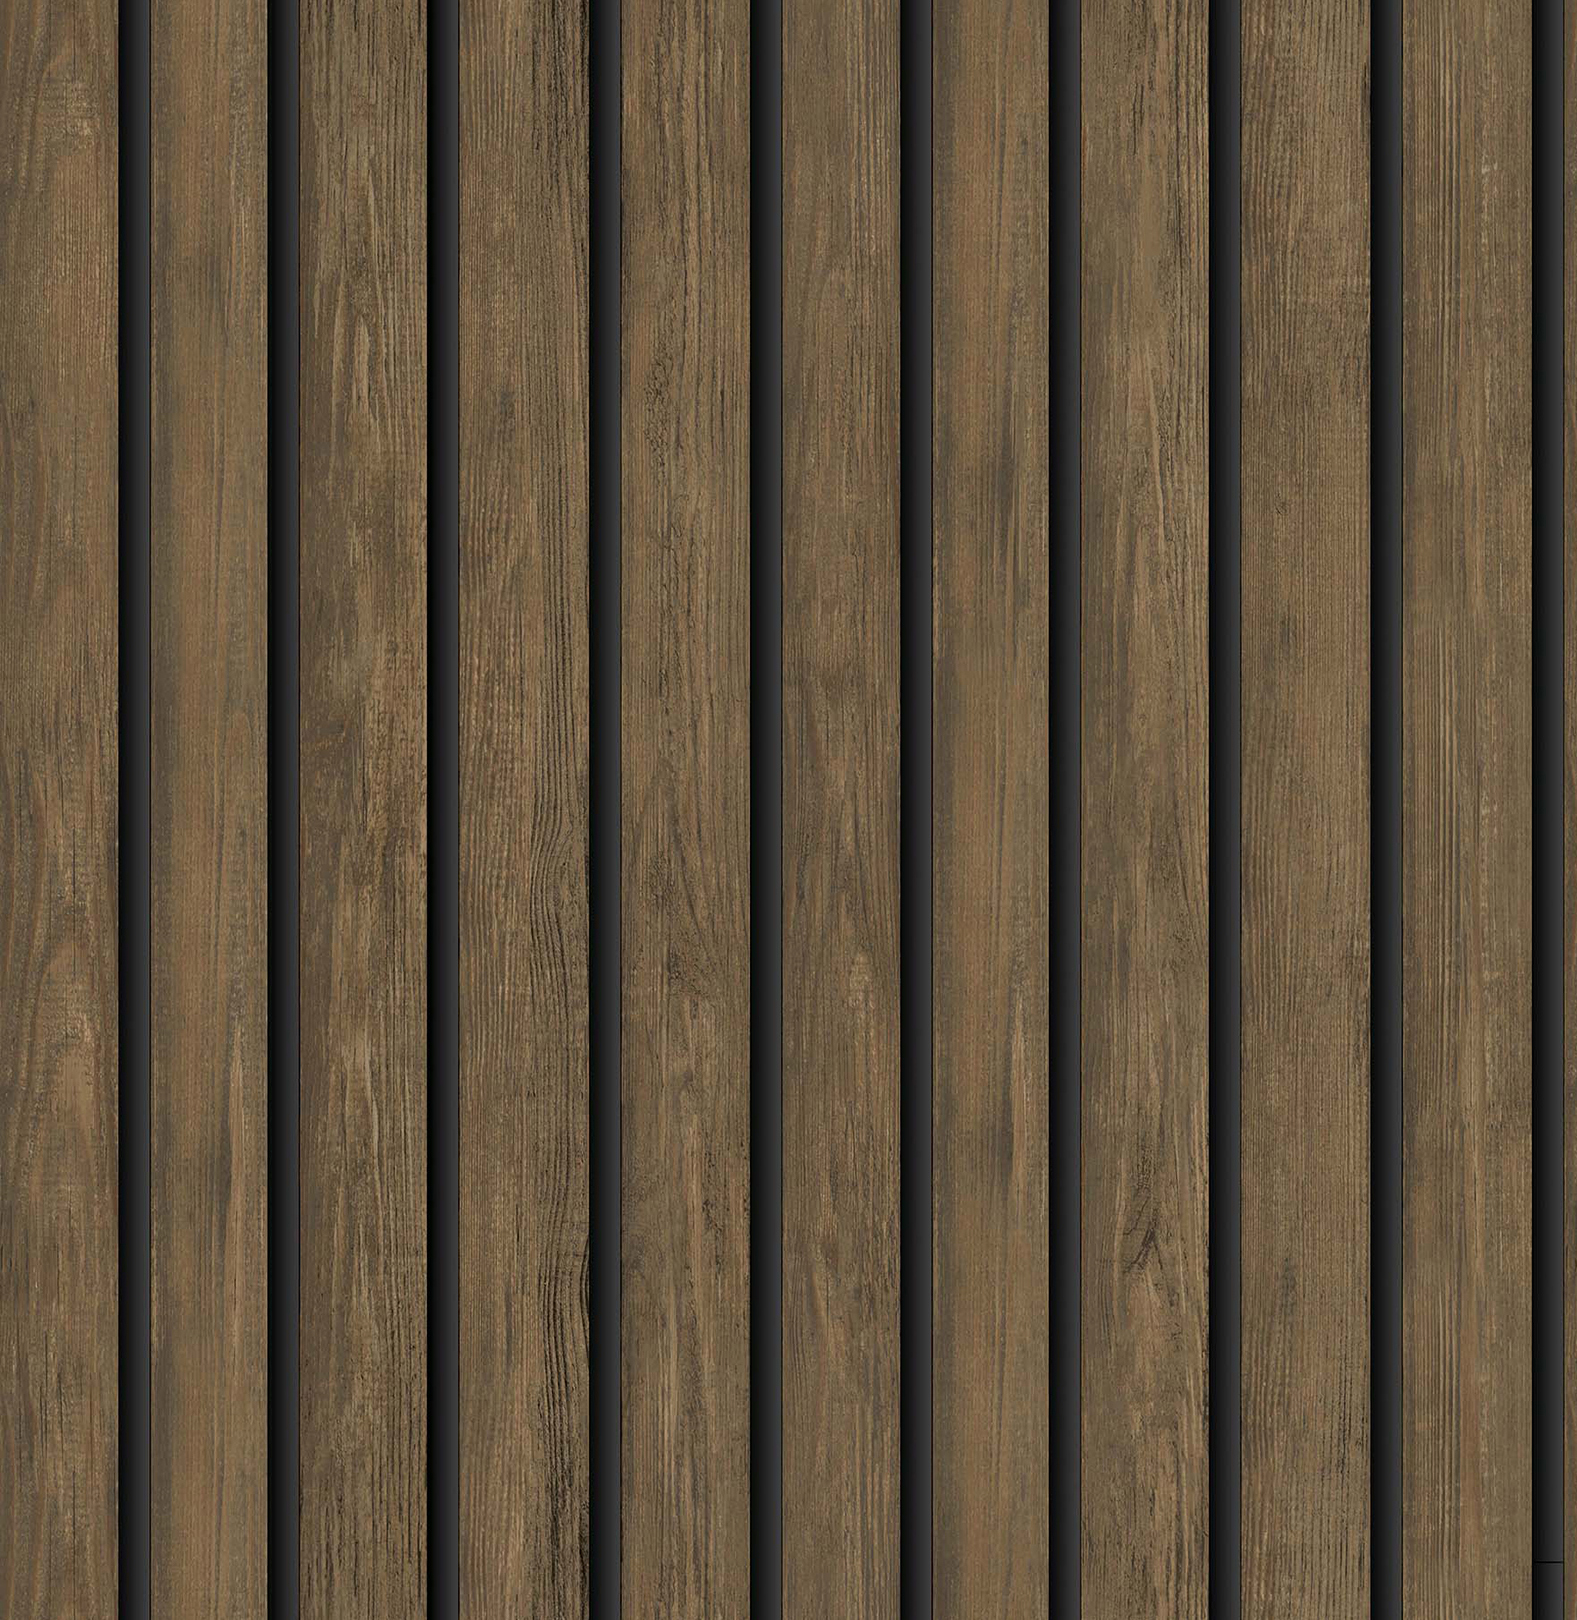 Holden Decor Wood Slat Dark Oak Wallpaper - 10.05m x 53cm